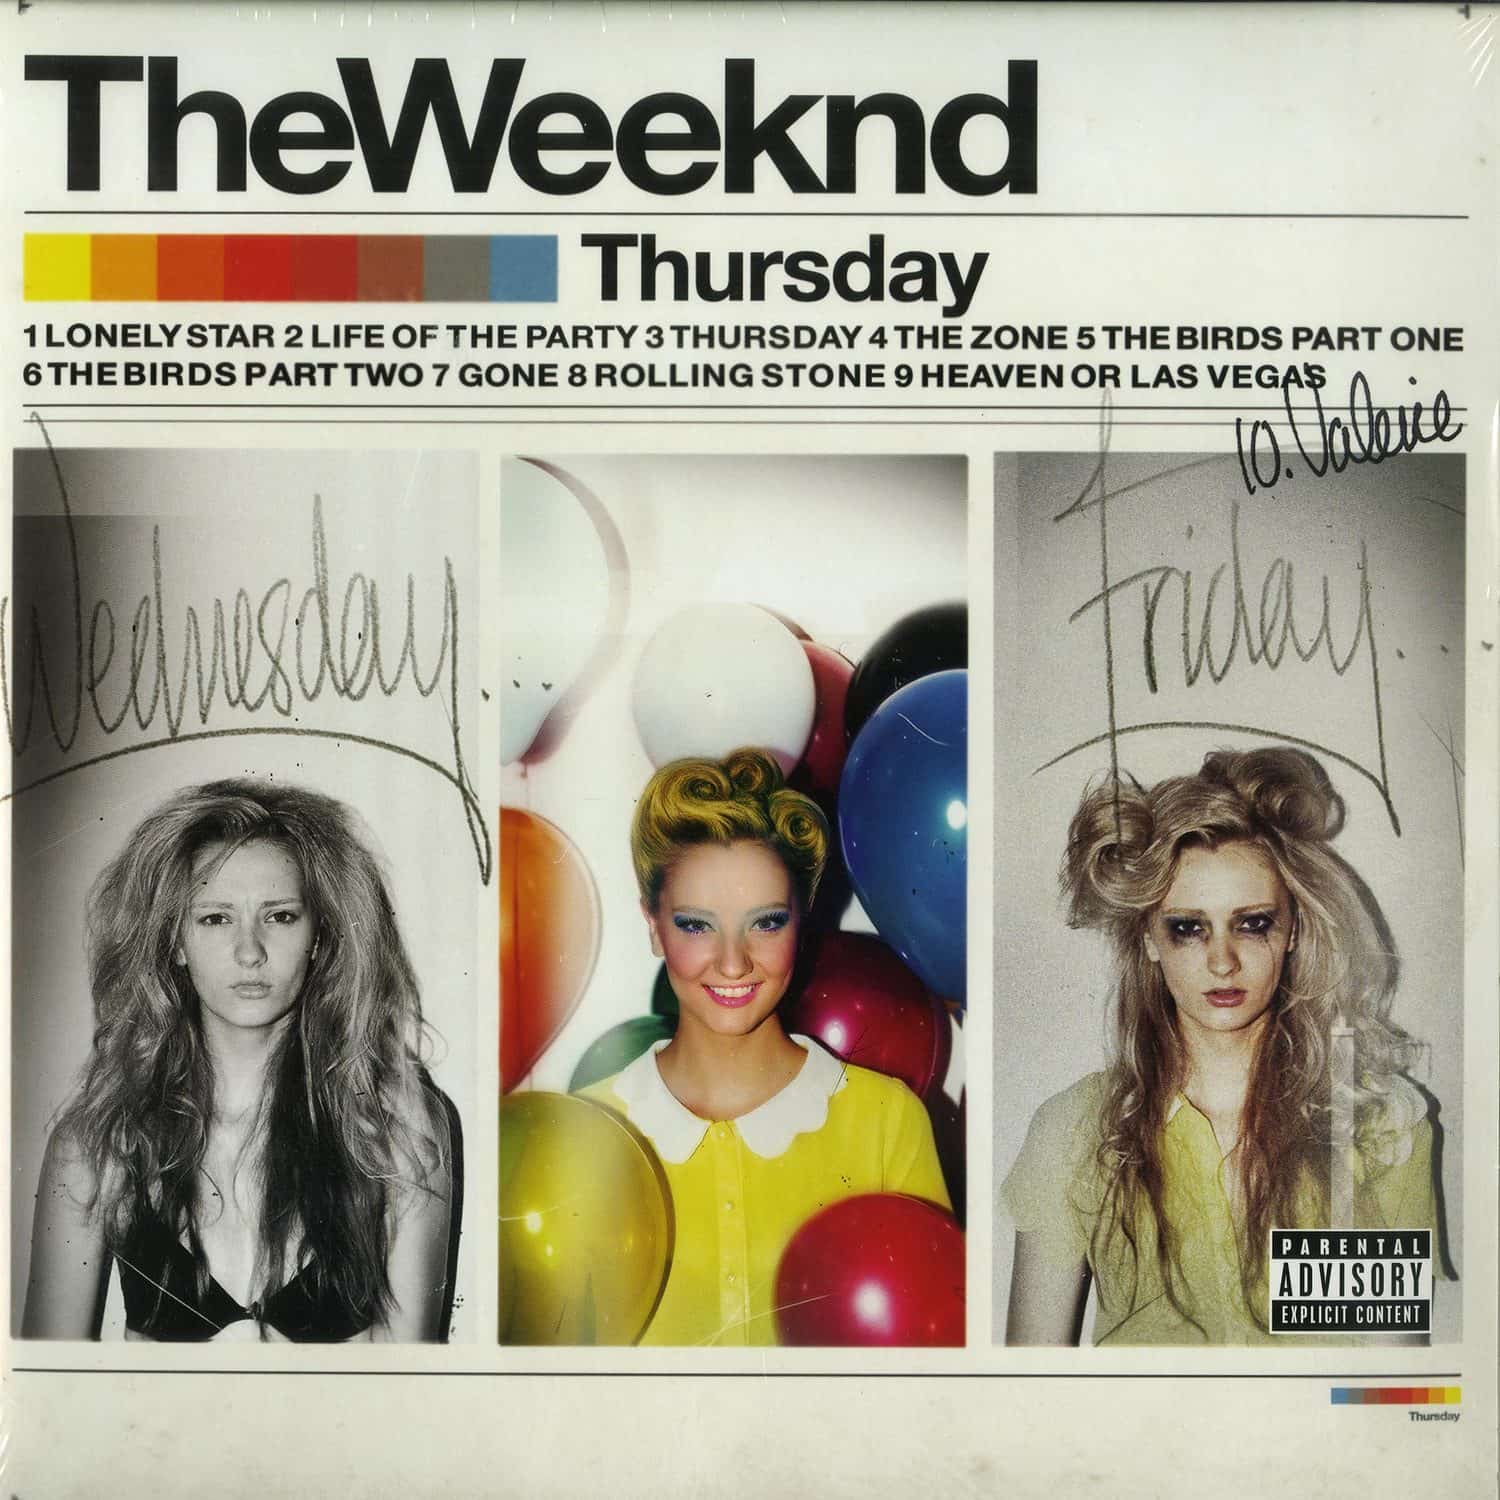 The Weeknd - THURSDAY 